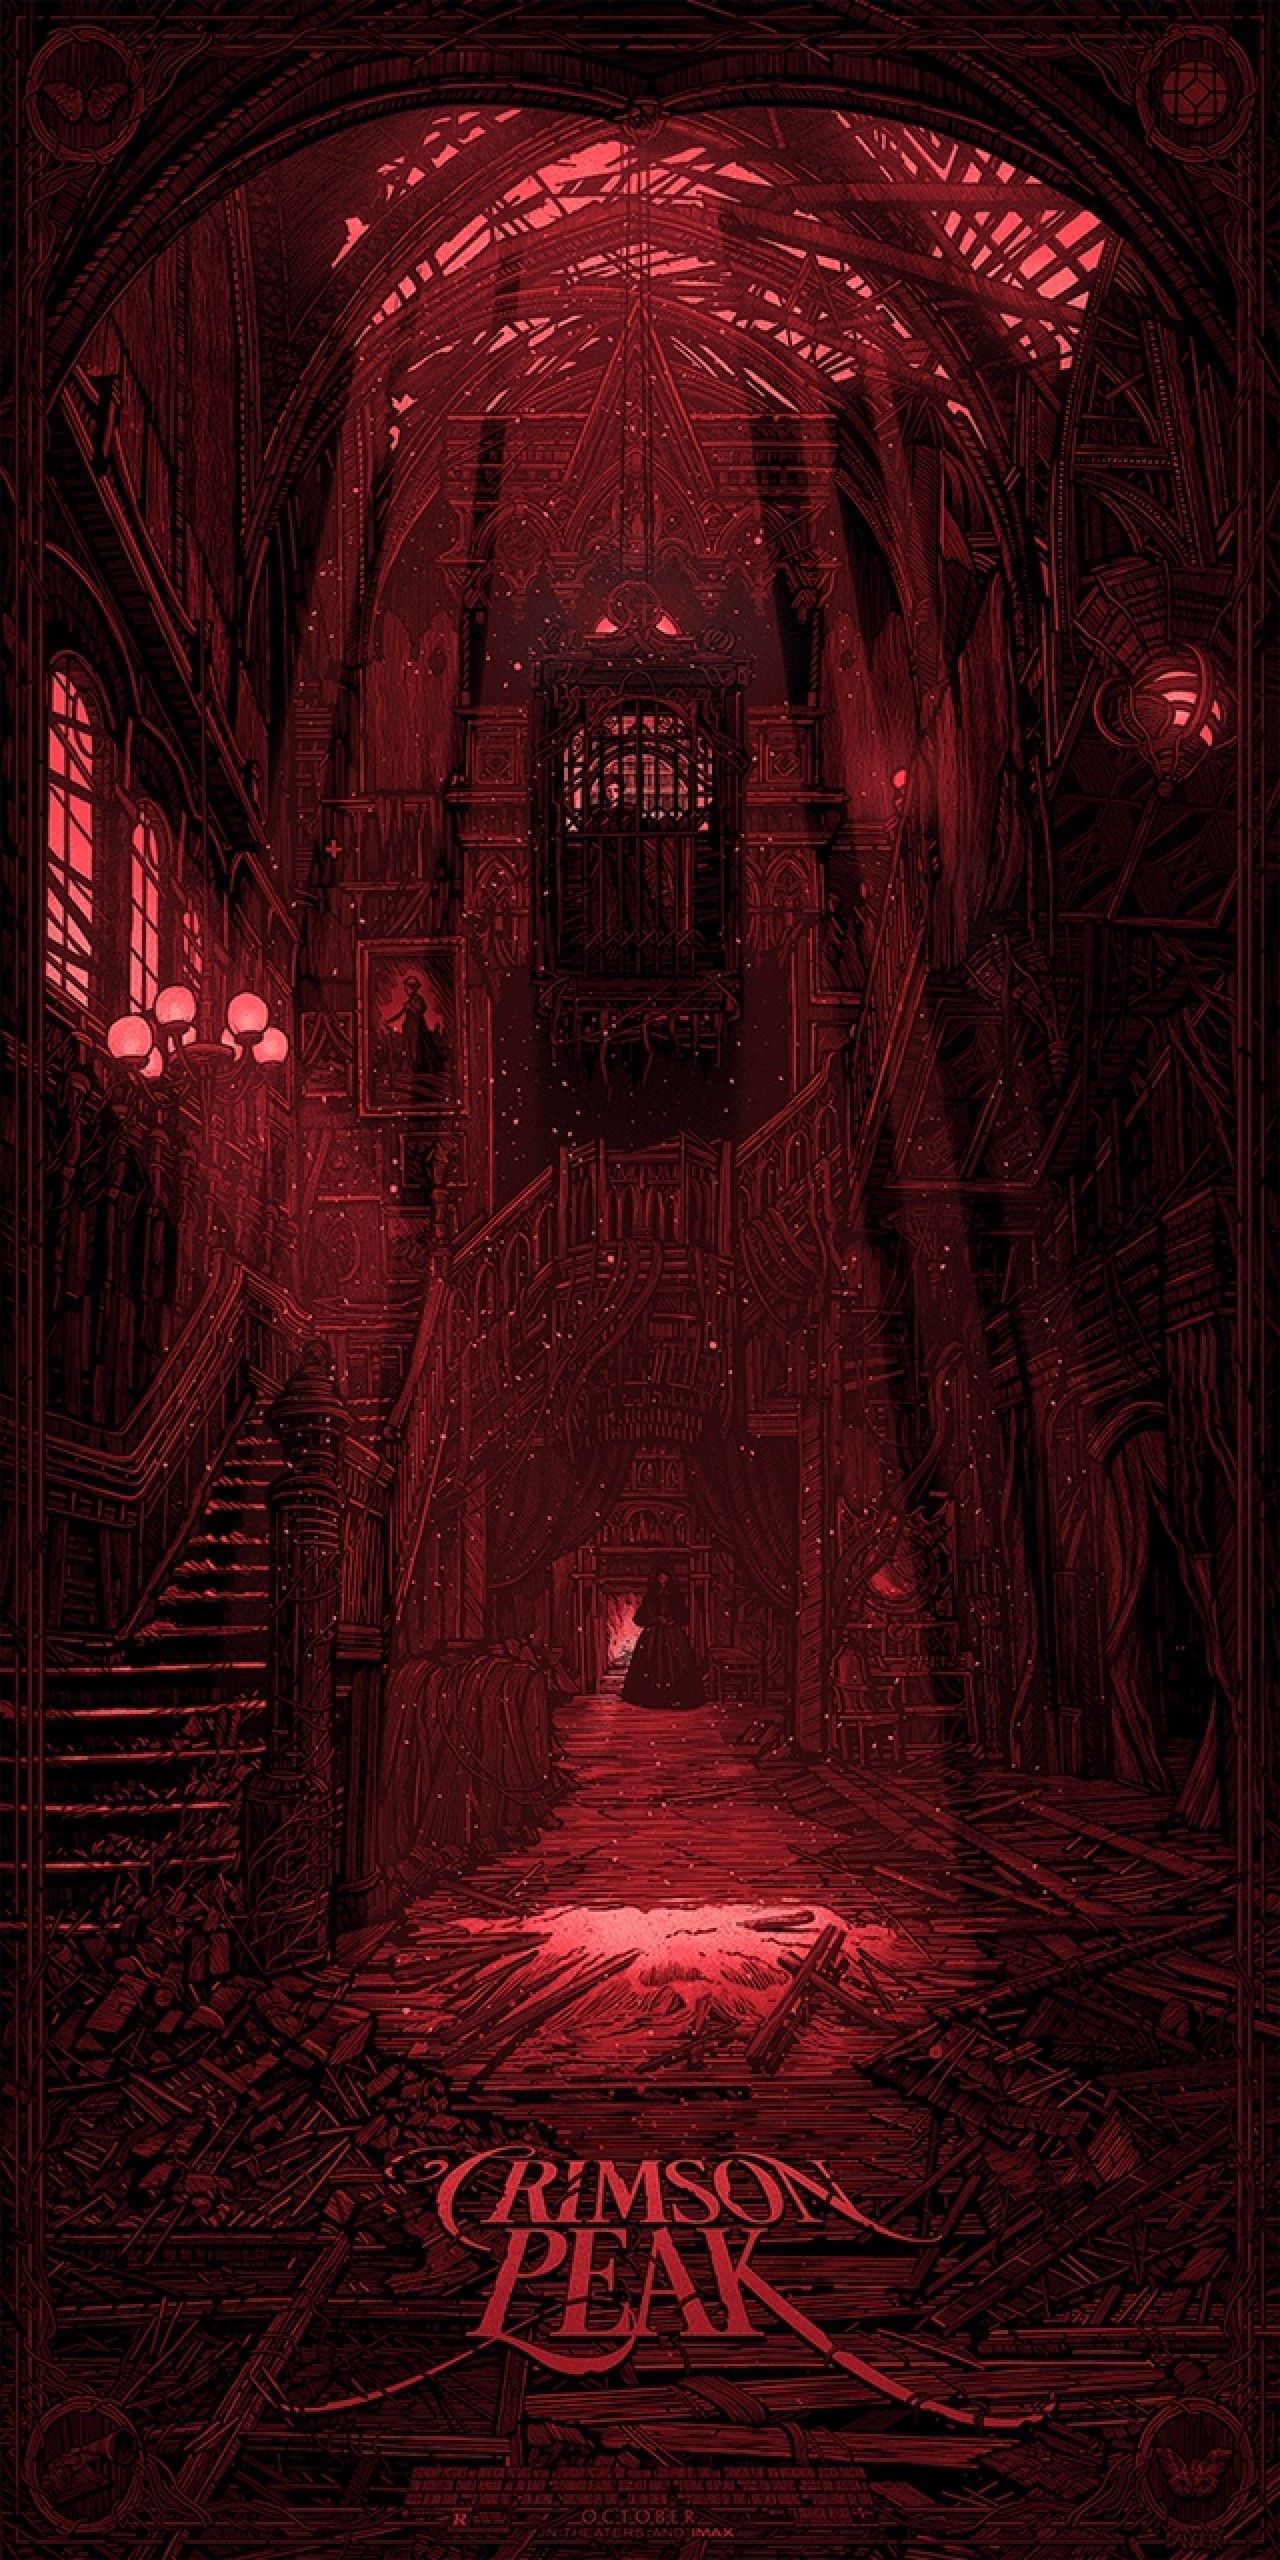 A dark and eerie looking poster - Crimson